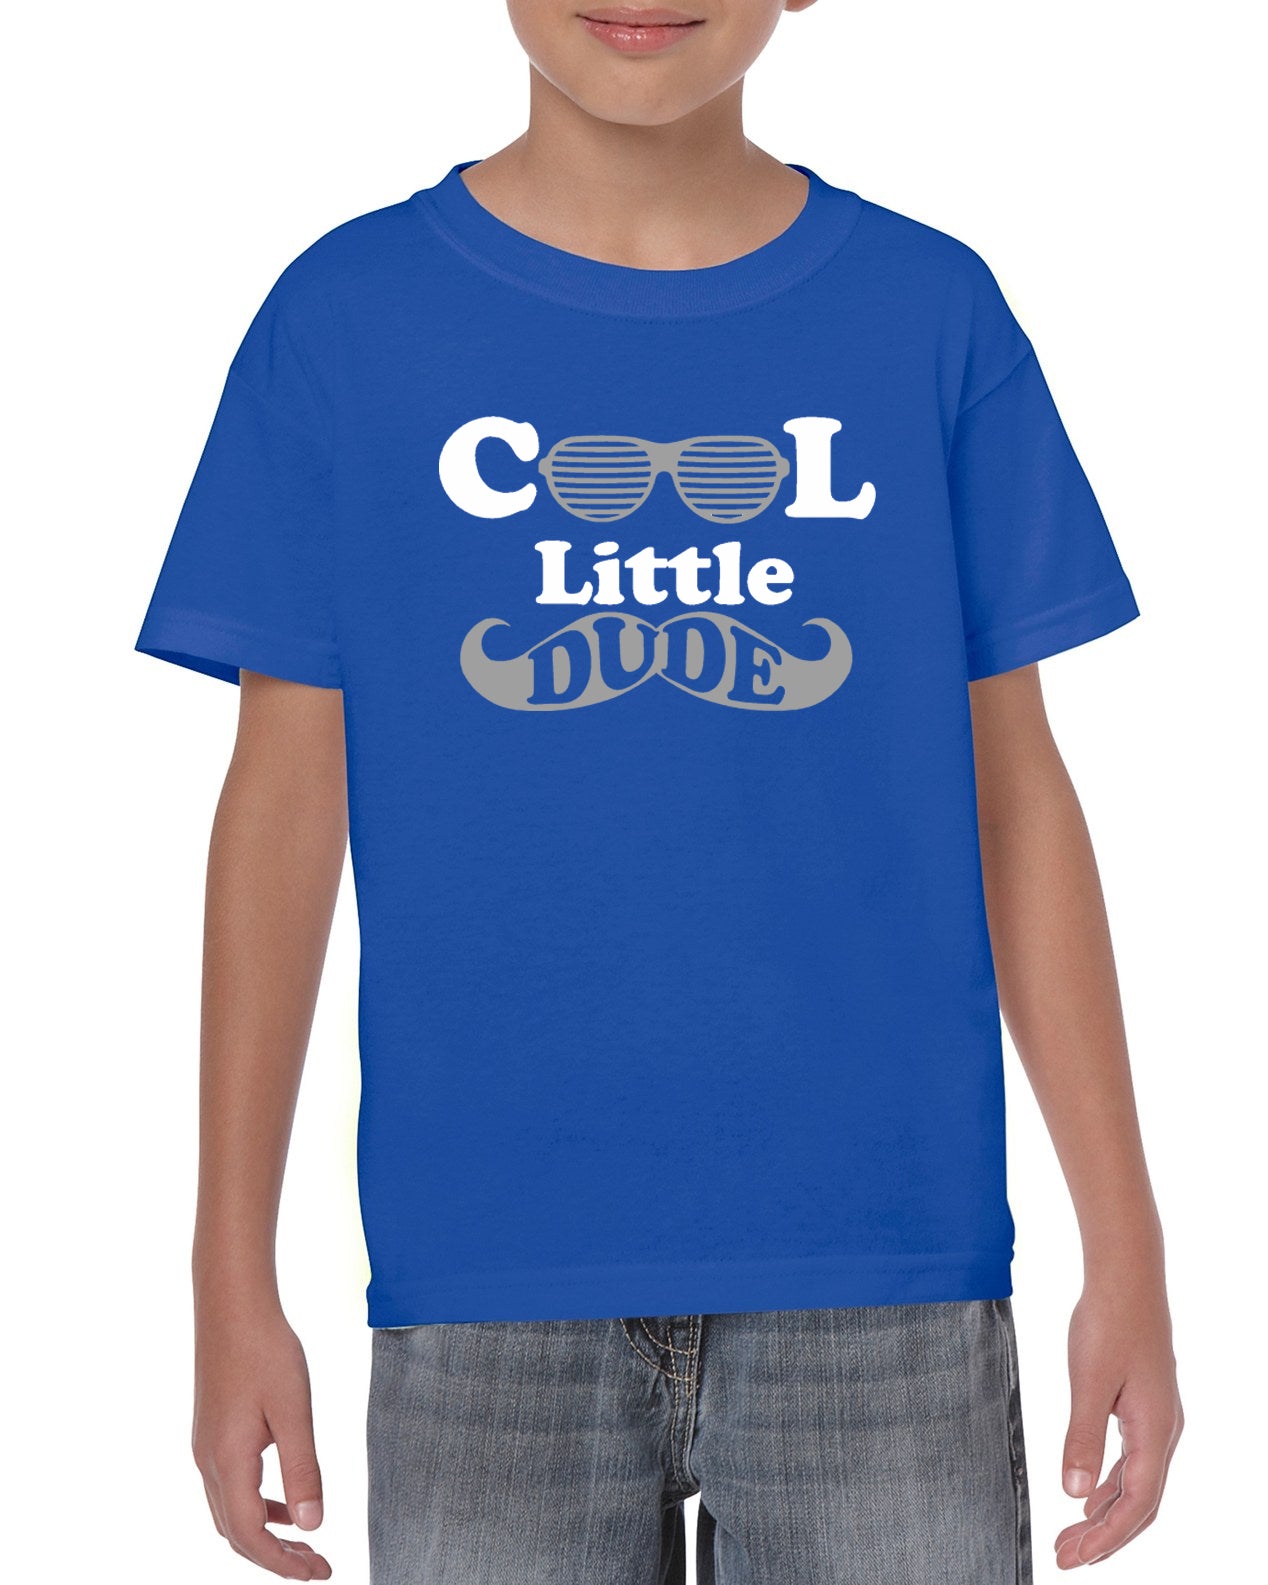 Cool Little Dude V1 Graphic Transfer Design Shirt – StickerDad & ShirtMama